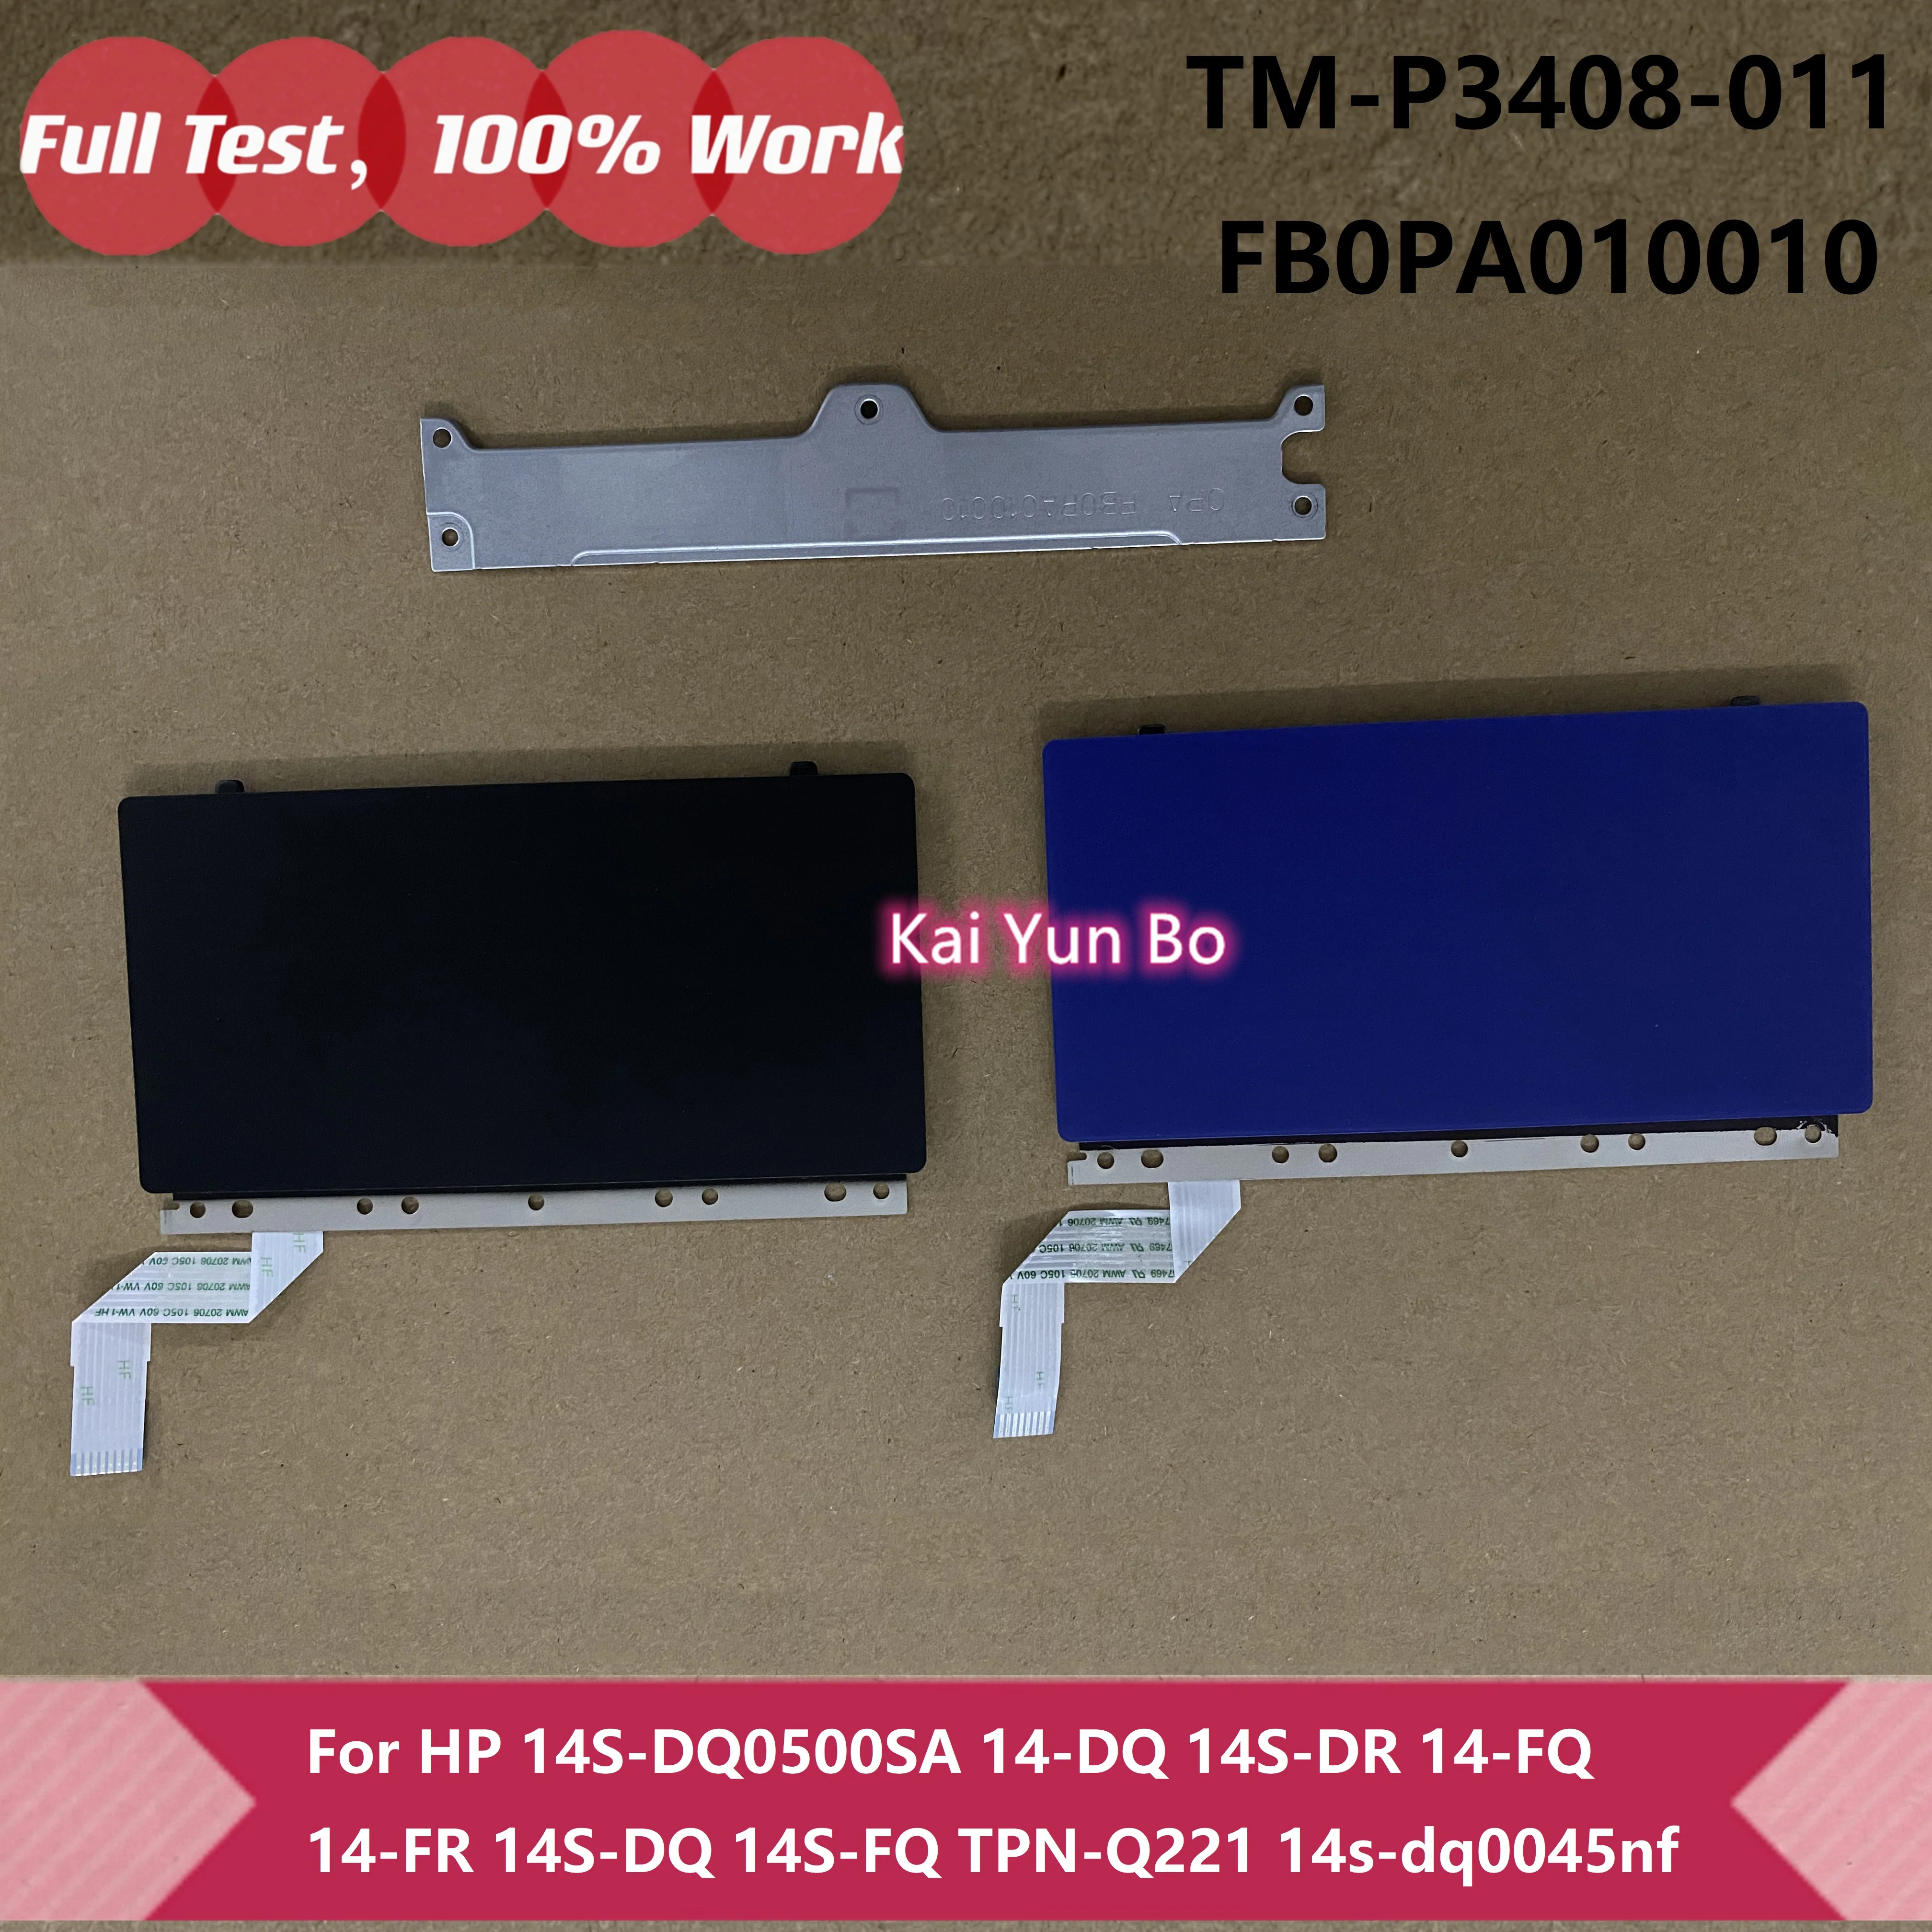 

Ноутбук HP 14S-DQ0500SA 14-DQ 14S-DR 14-FQ 14-FR 14S-DQ 14S-FQ TPN-Q221 14s-dq0045nf TM-P3408-011 Сенсорная панель с опорным кронштейном для кабеля